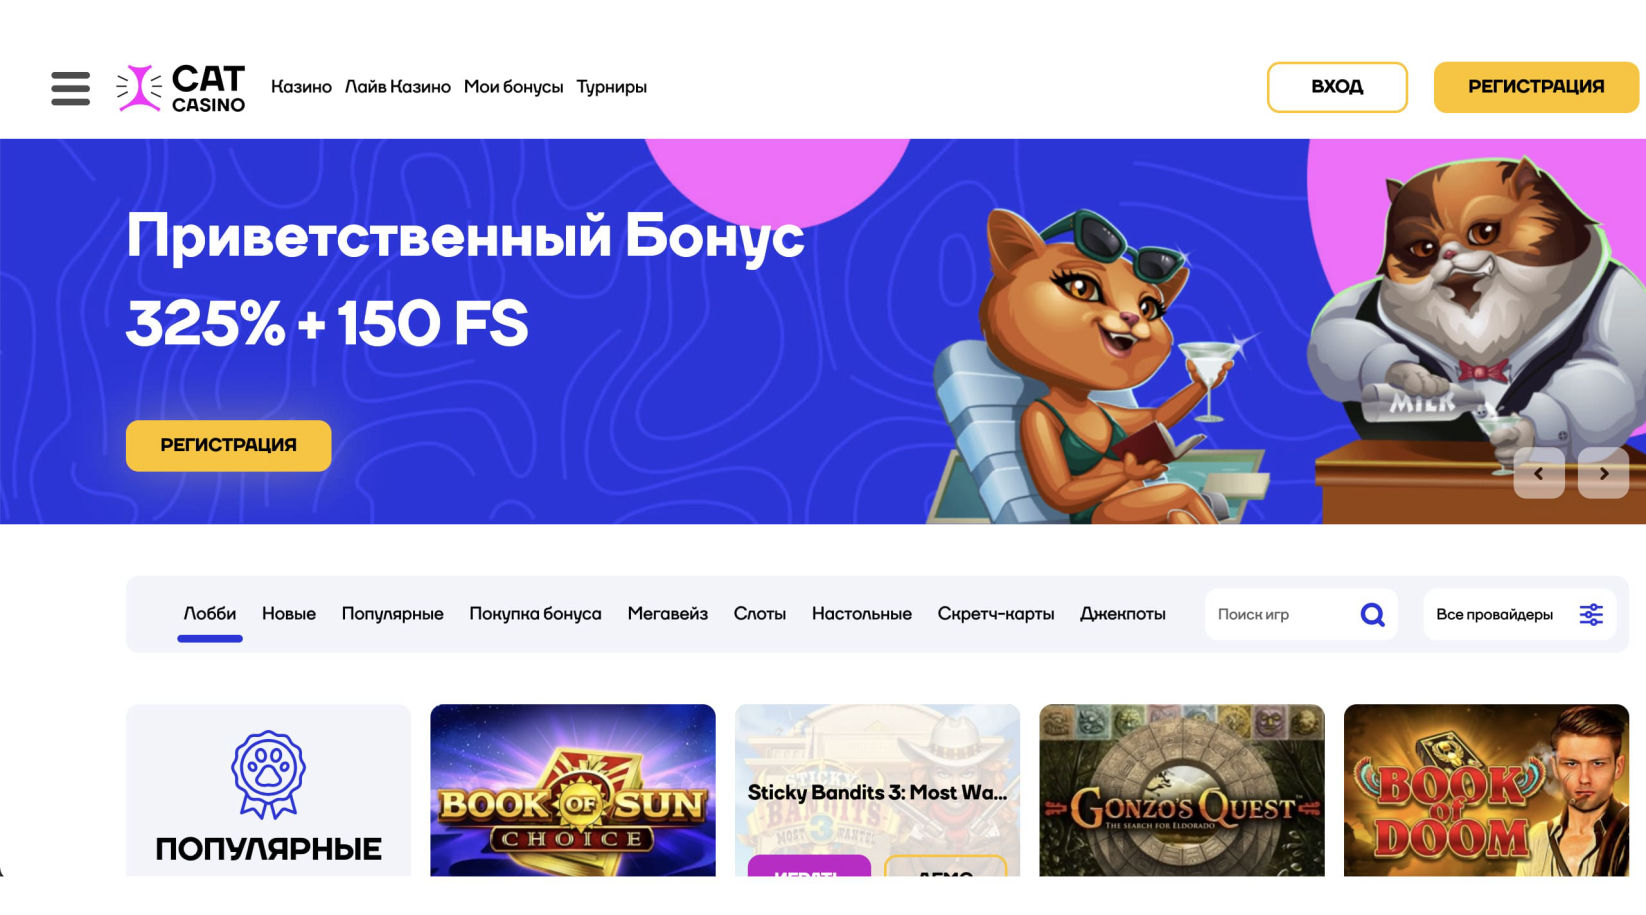 Cat Casino - новое онлайн казино с бонусами